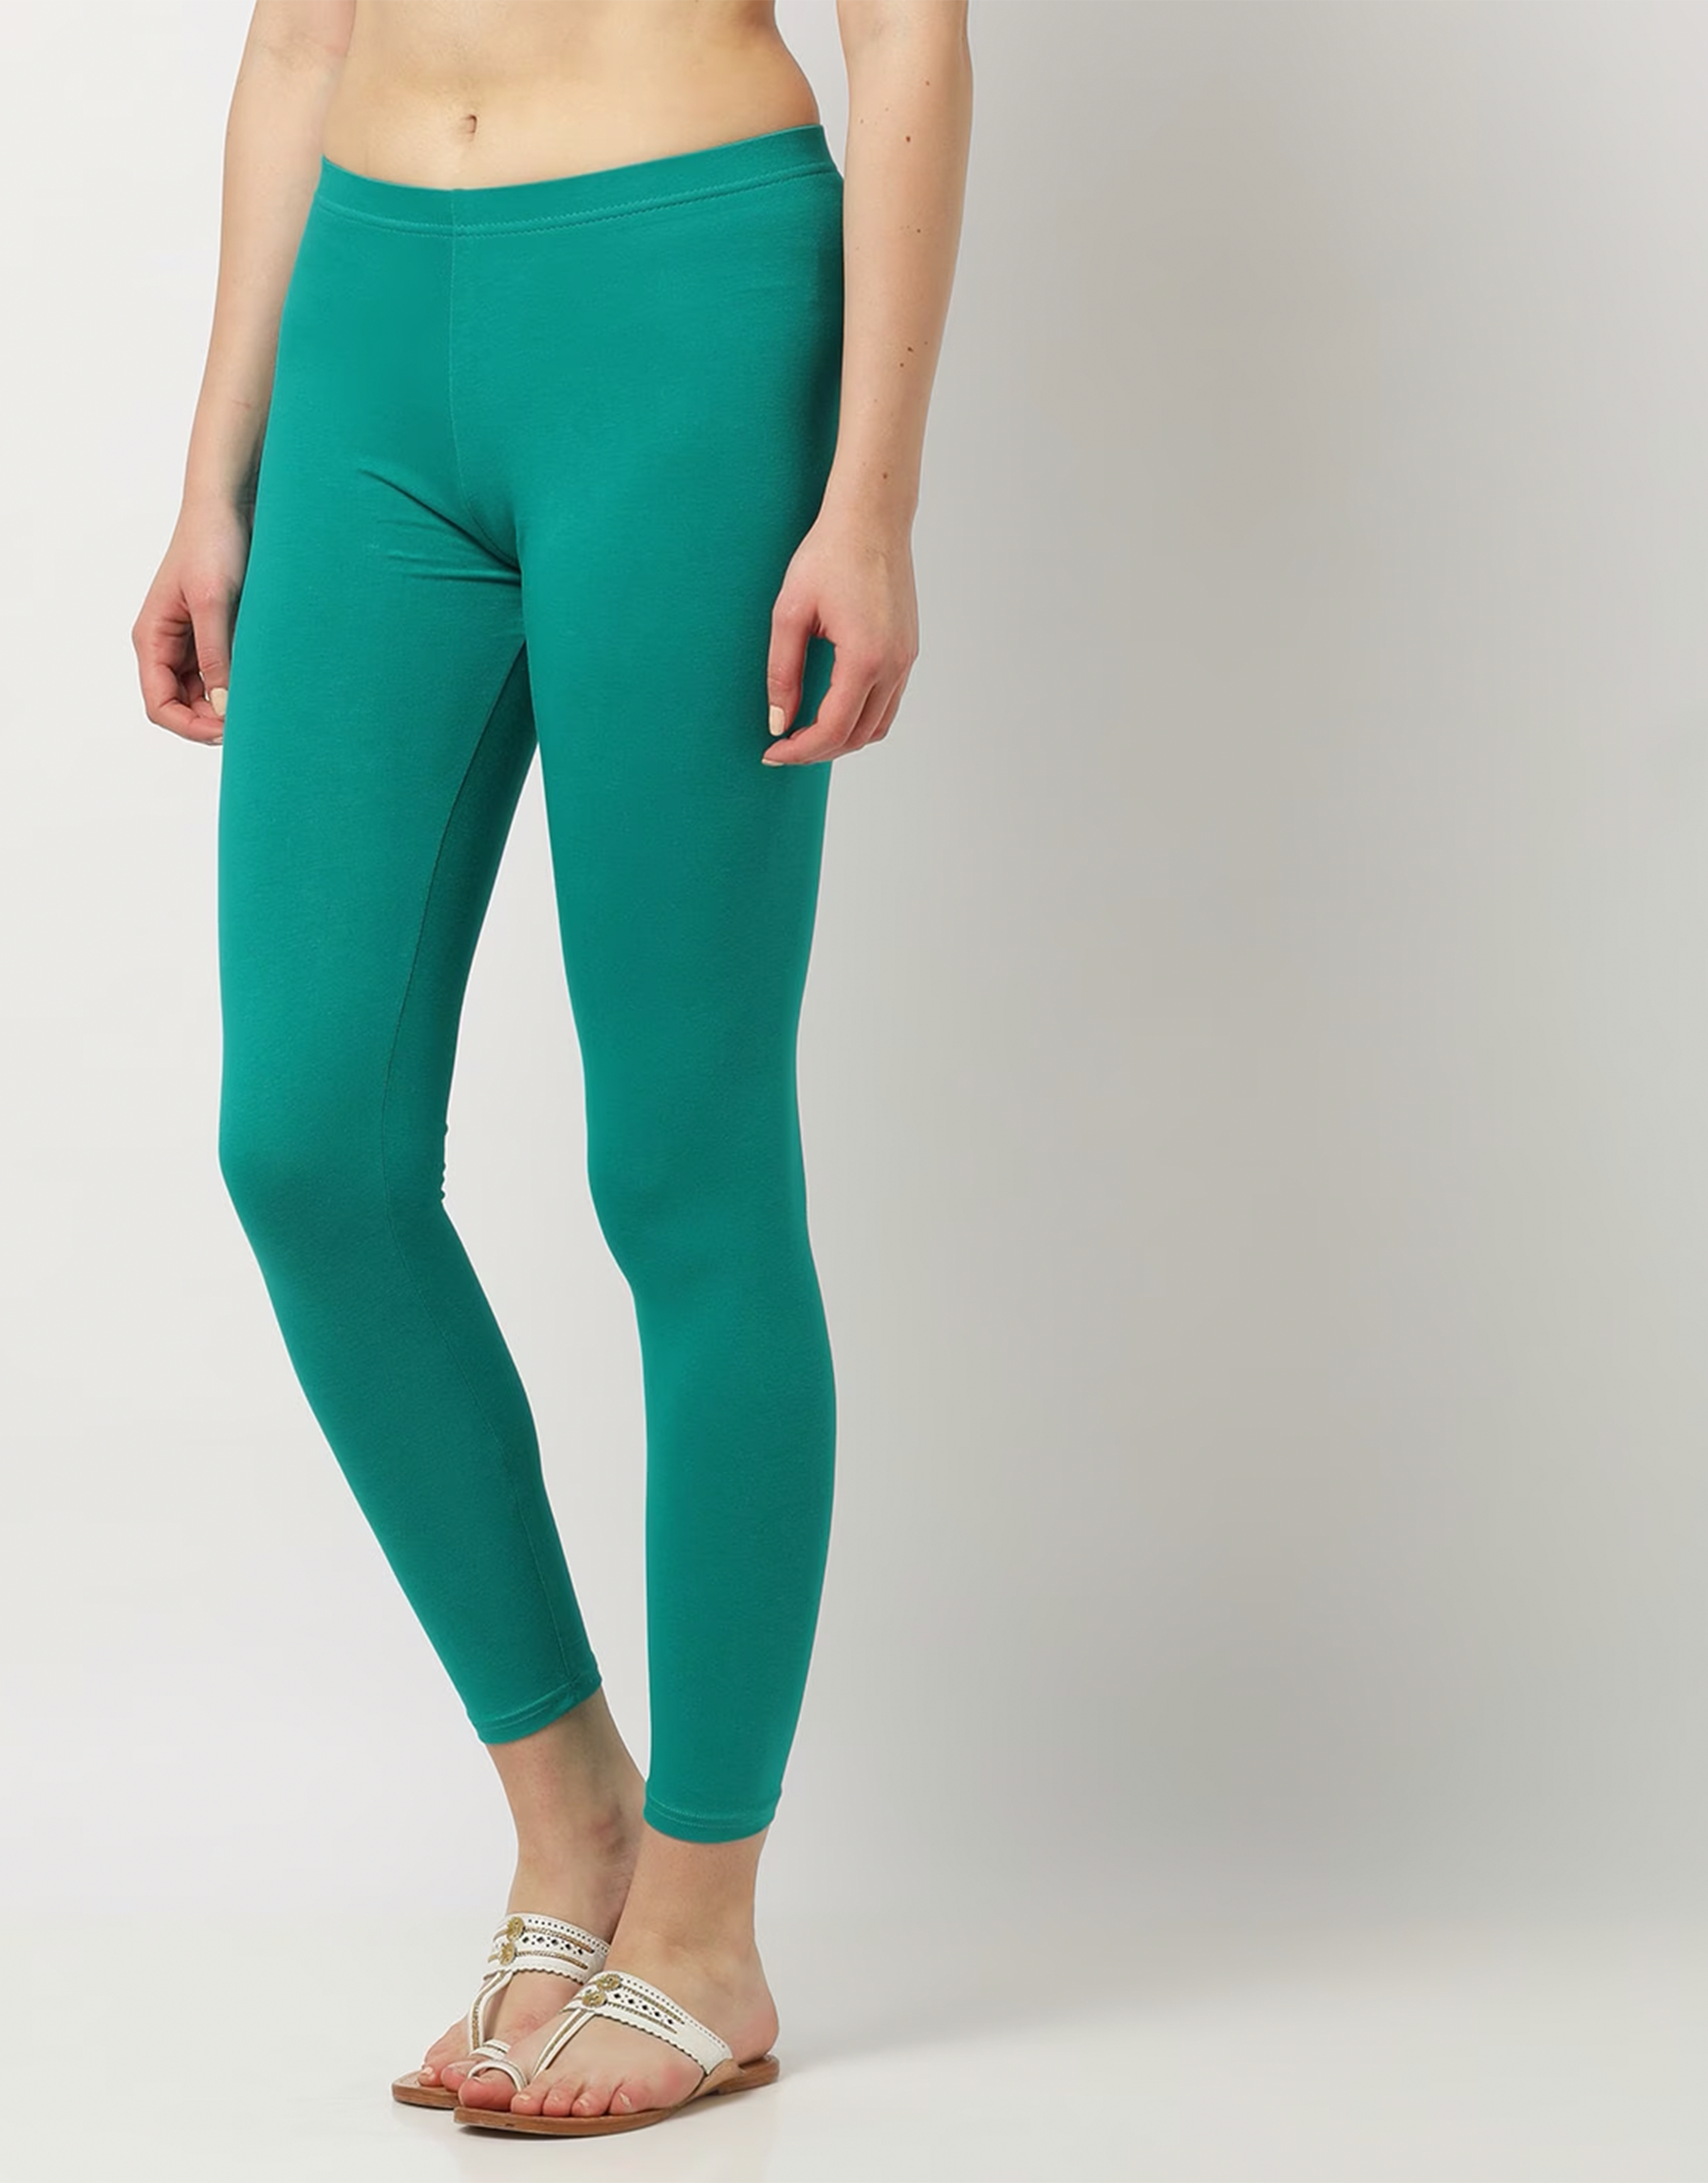 YELETE 2-PK Women's Seamless Fleece Lined Leggings (Black & Jade Green, One  Size) at Amazon Women's Clothing store